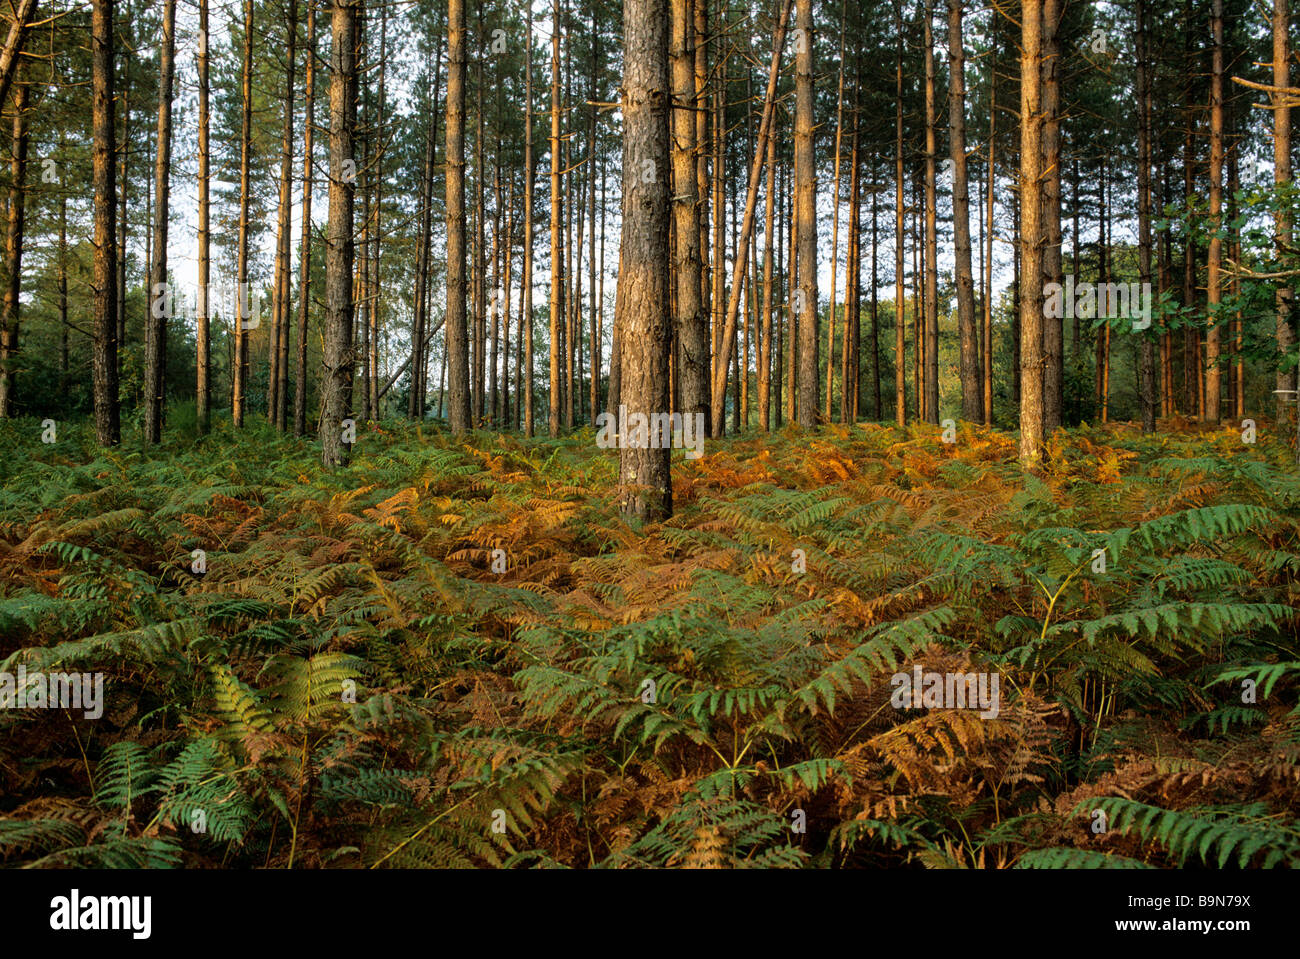 France, Loir et Cher, Sologne, La Ferte Beauharnais, undergrowth of pines covered with ferns Stock Photo